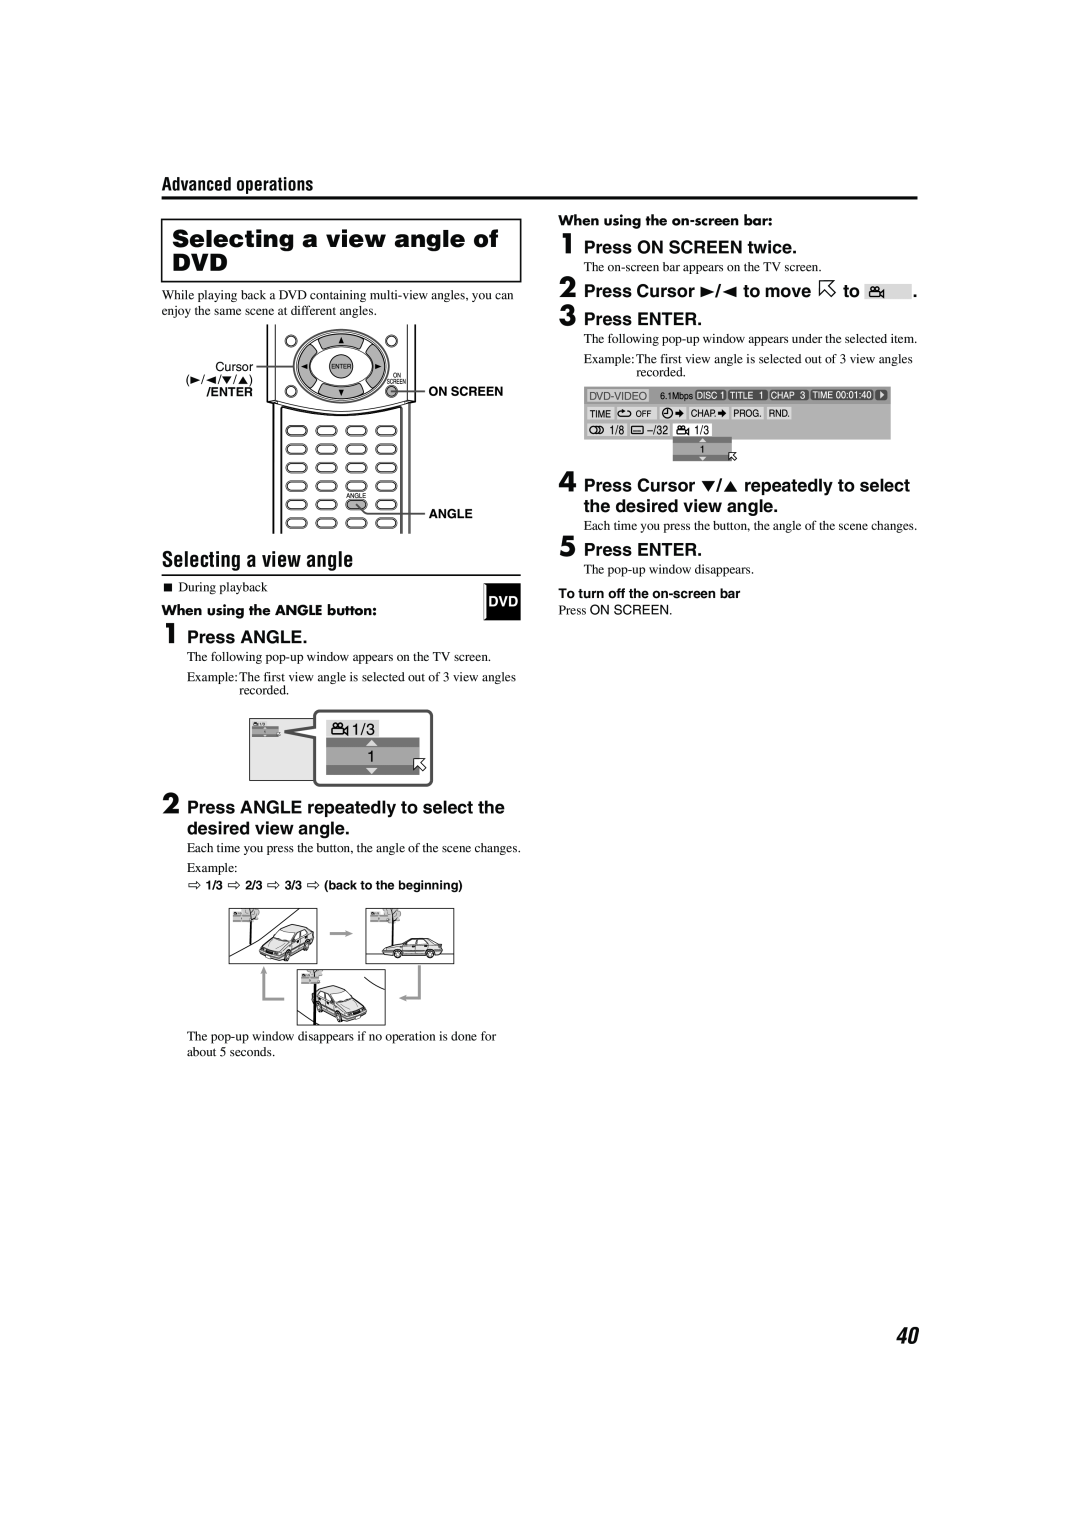 JVC M45 manual Selecting a view angle of DVD, Press ANGLE, Advanced operations, Press ON SCREEN twice, Press ENTER 